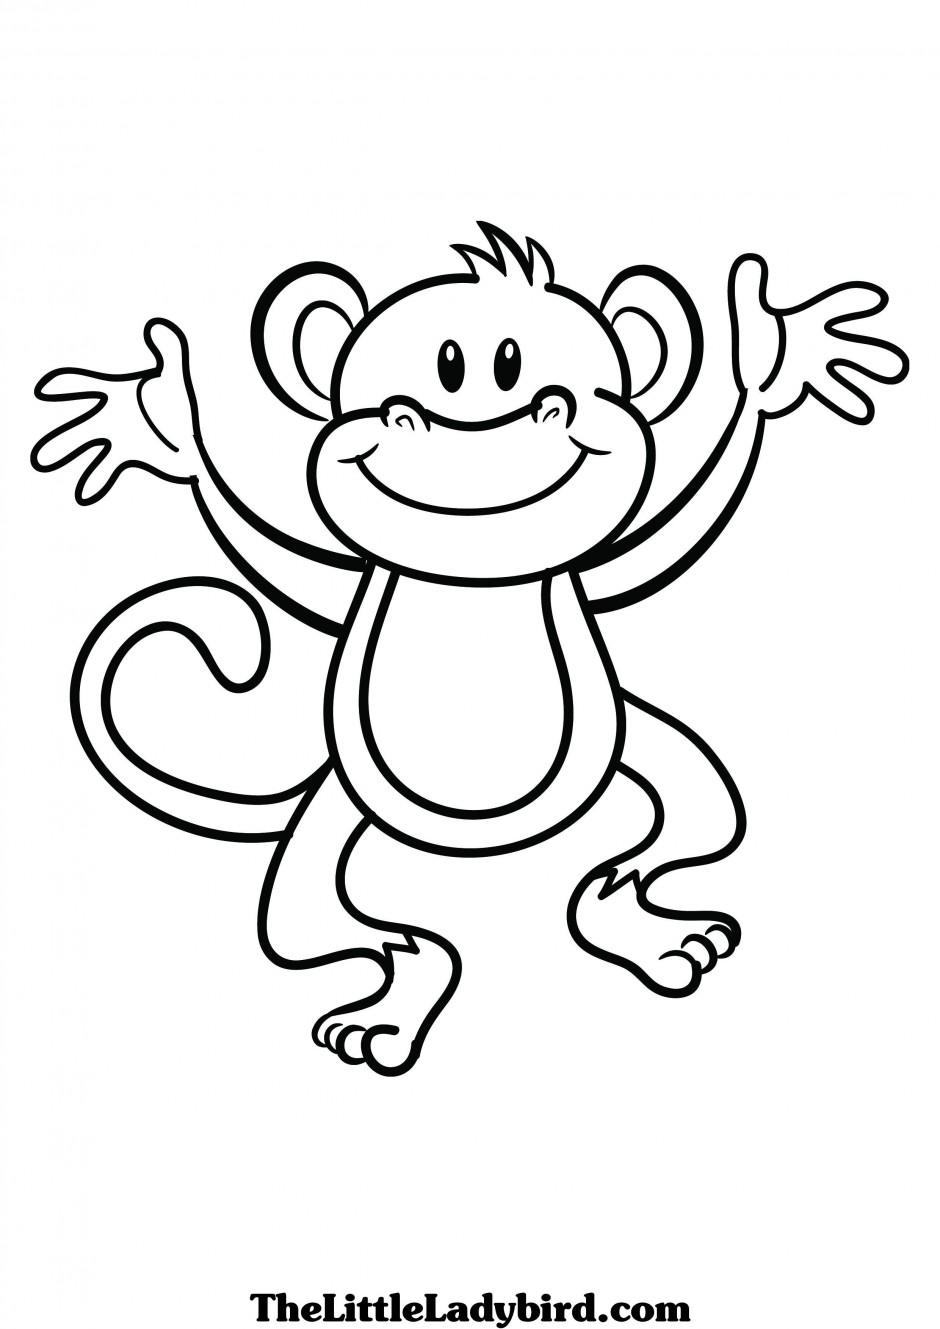 Cute monkey clip art black and white free - Clipartix